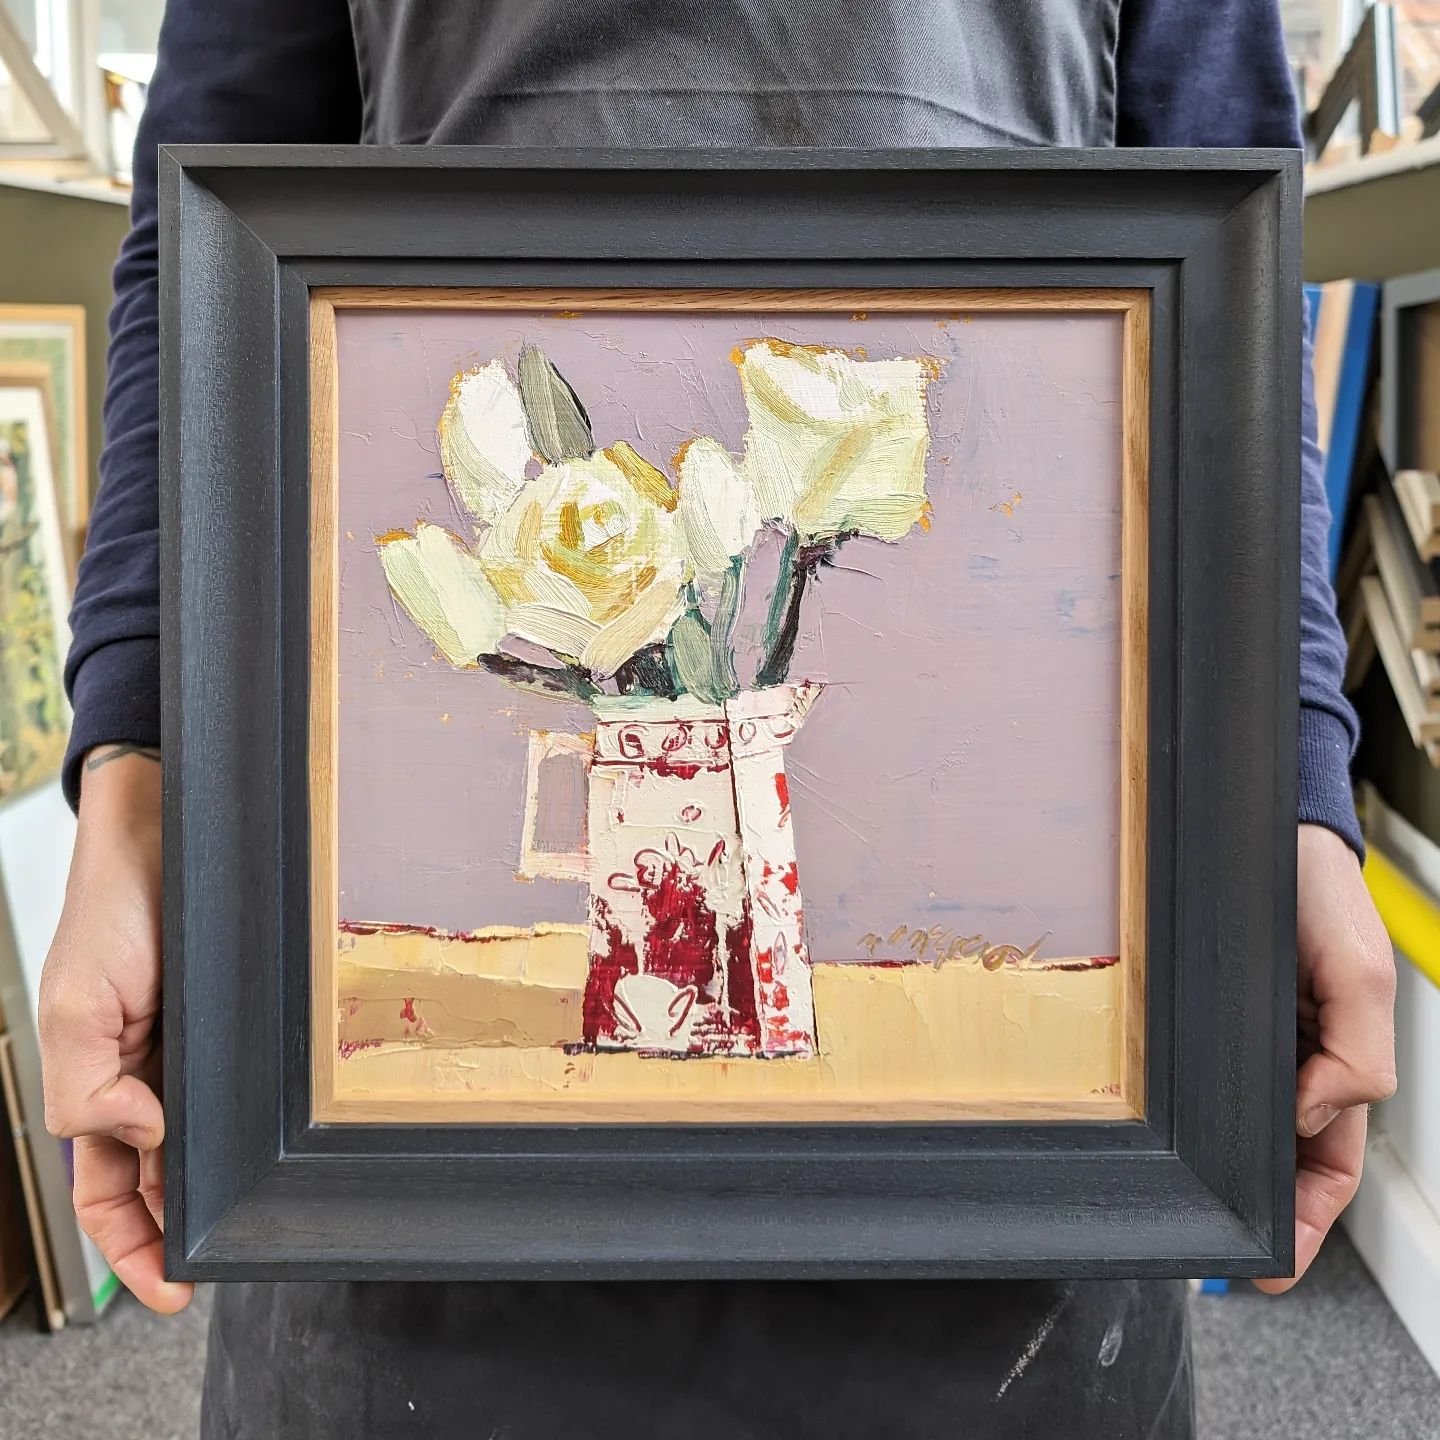 Mhairi McGregor - White Roses
Framed in a 40 x 40 shaped timber frame, hand finished to Charcoal with an oak slip.
#LocalFramers
#PictureFraming
#CustomFrames
#ArtFraming
#FrameShop
#SupportLocalArt
#Craftsmanship
#FrameArt
#GalleryFrames
#ArtConserv